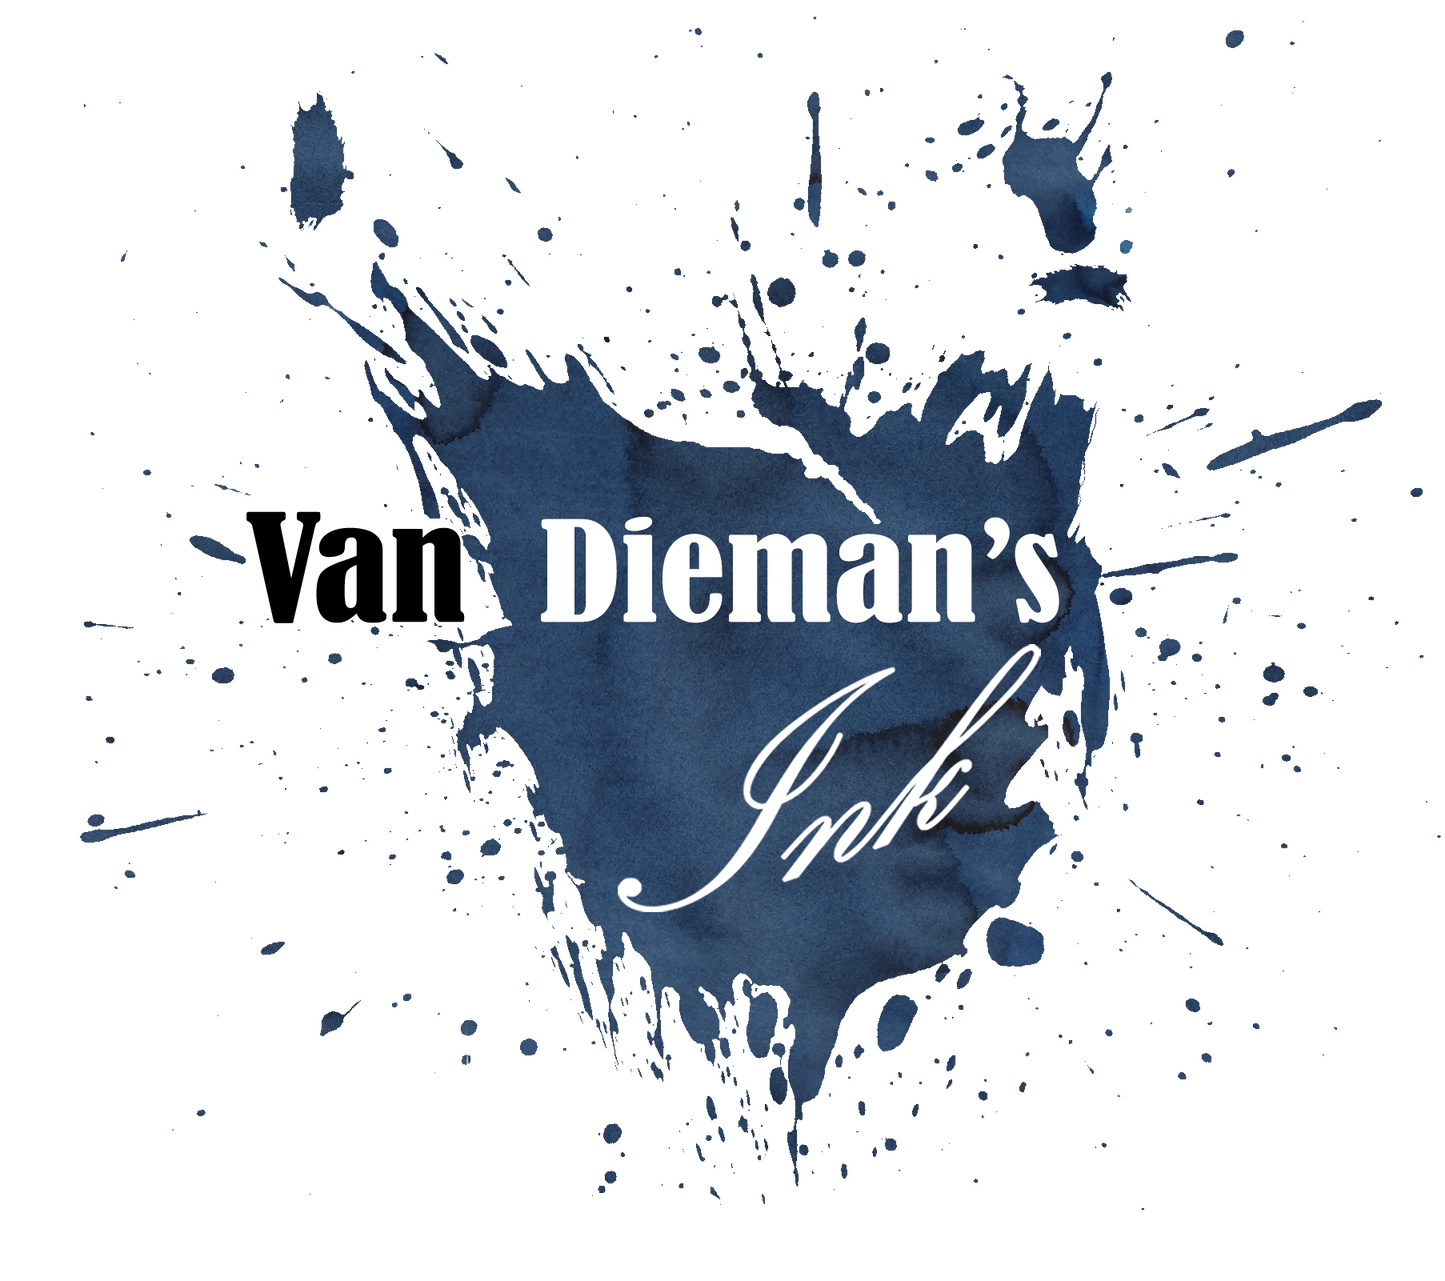 Van Dieman's Birds of a Feather - Blue Jay Wing - Fountain Pen Ink